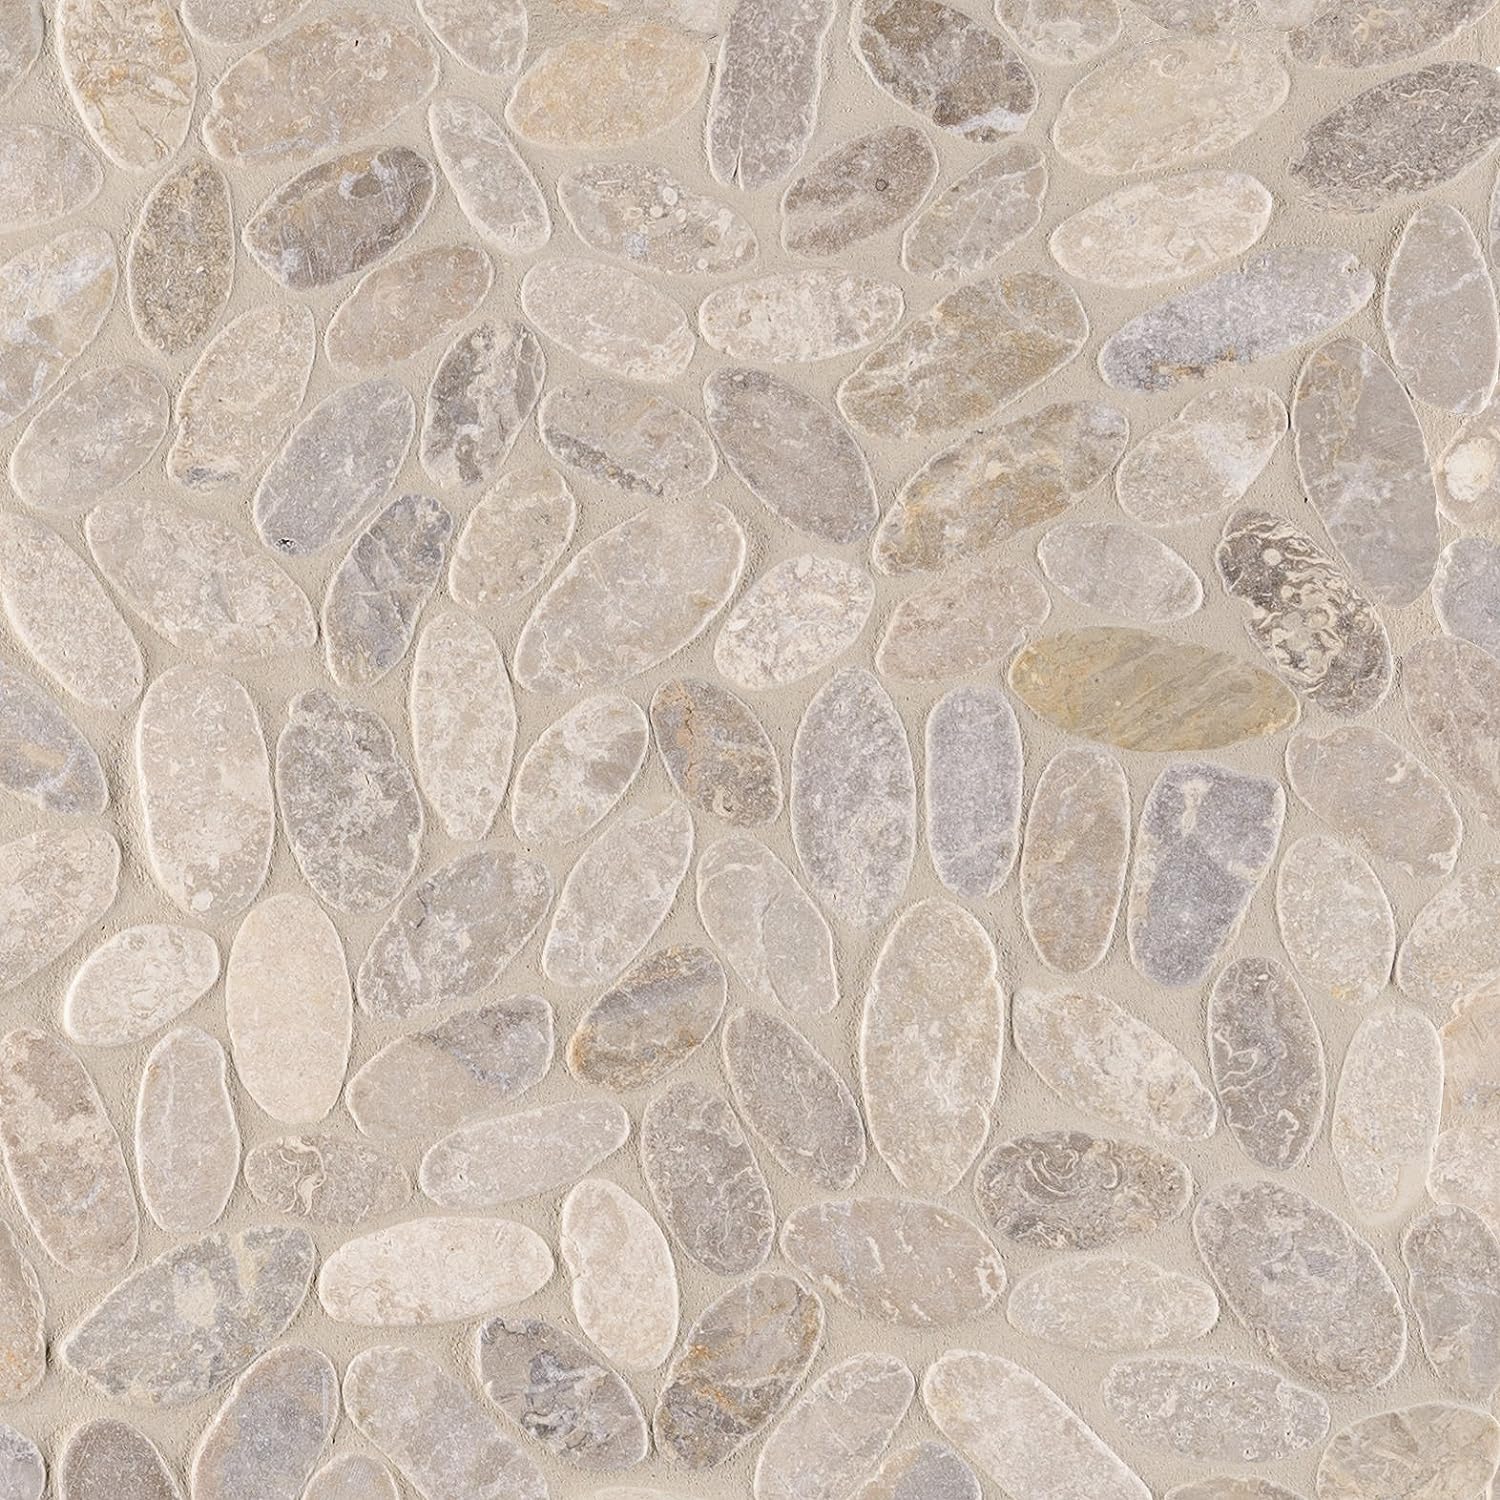 MS International Slice Tumbled Pebble PEB-ASH Mesh-Mounted Floor Wall Tile 11.81 x 11.81 in. x 10 mm Mosaic (Box of 10 Sheets)